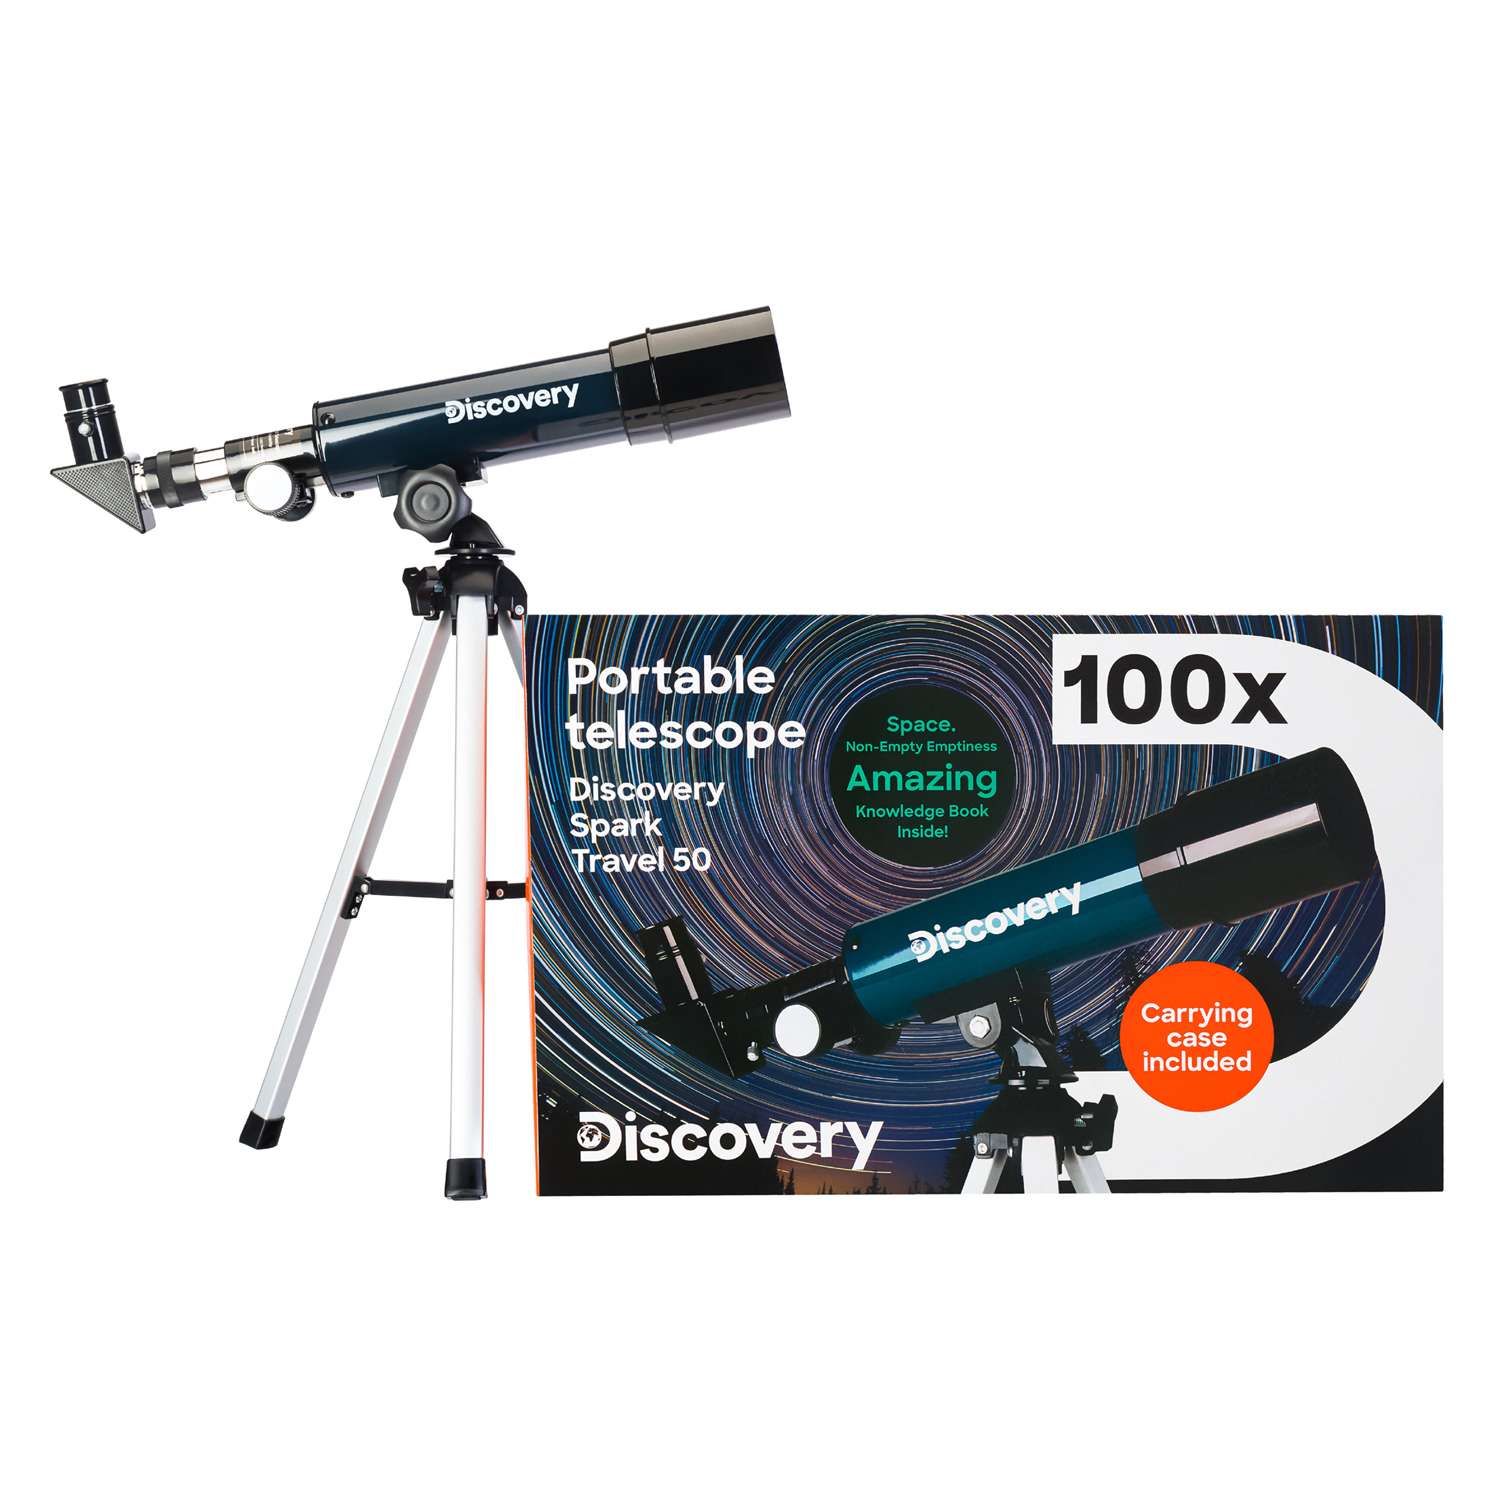 Телескоп DISCOVERY Spark Travel 50 с книгой - фото 2